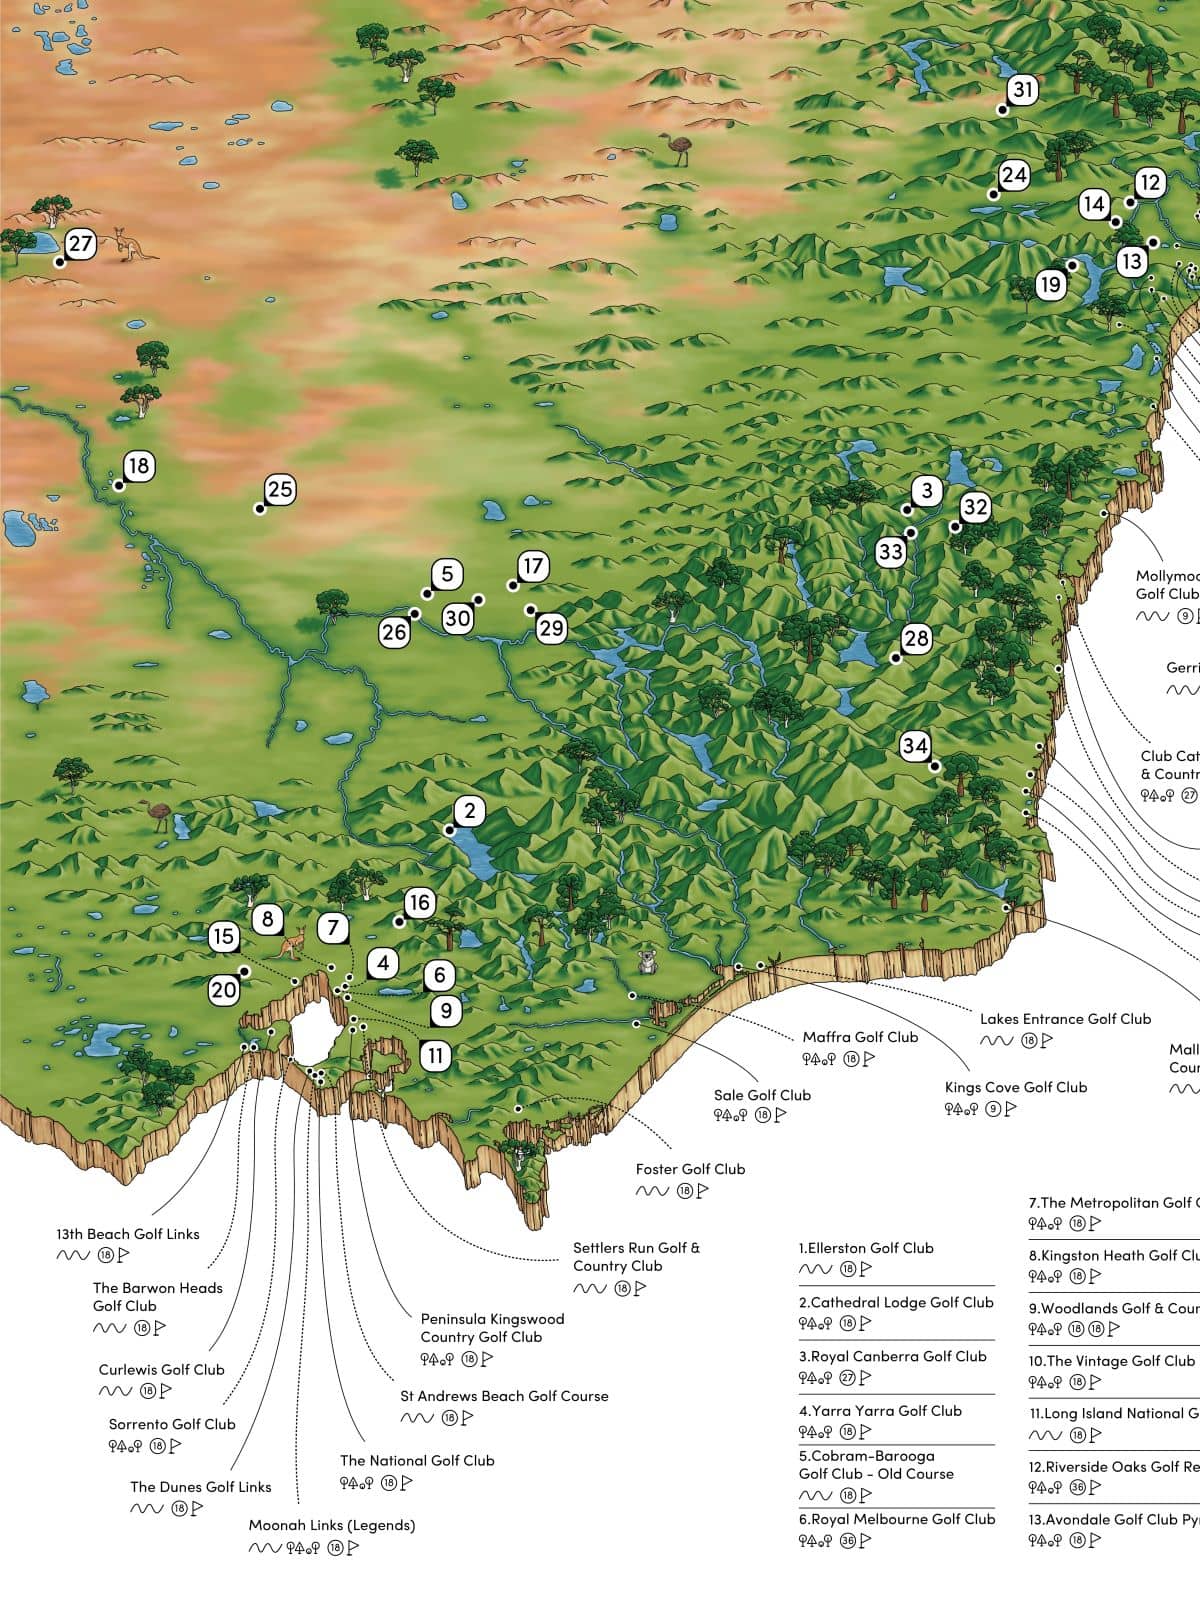 The Eastern Australian Golf Map